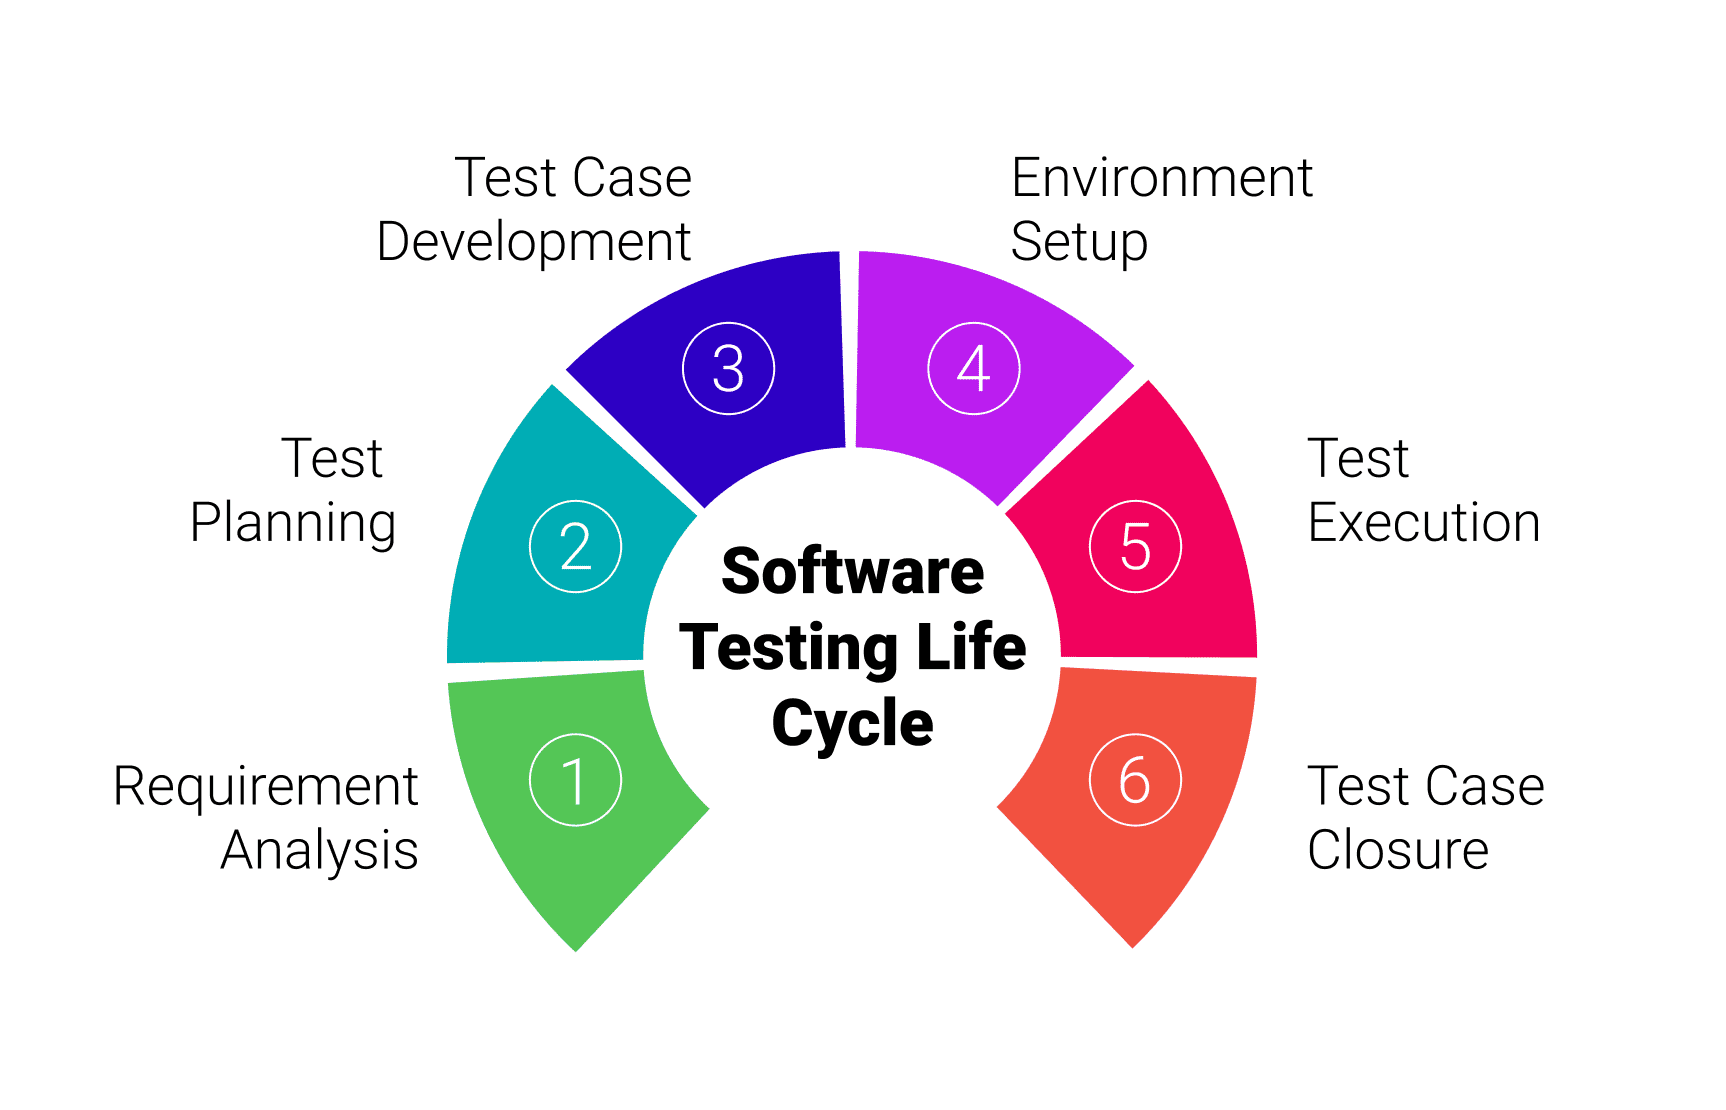 Software Testing Life Cycle image